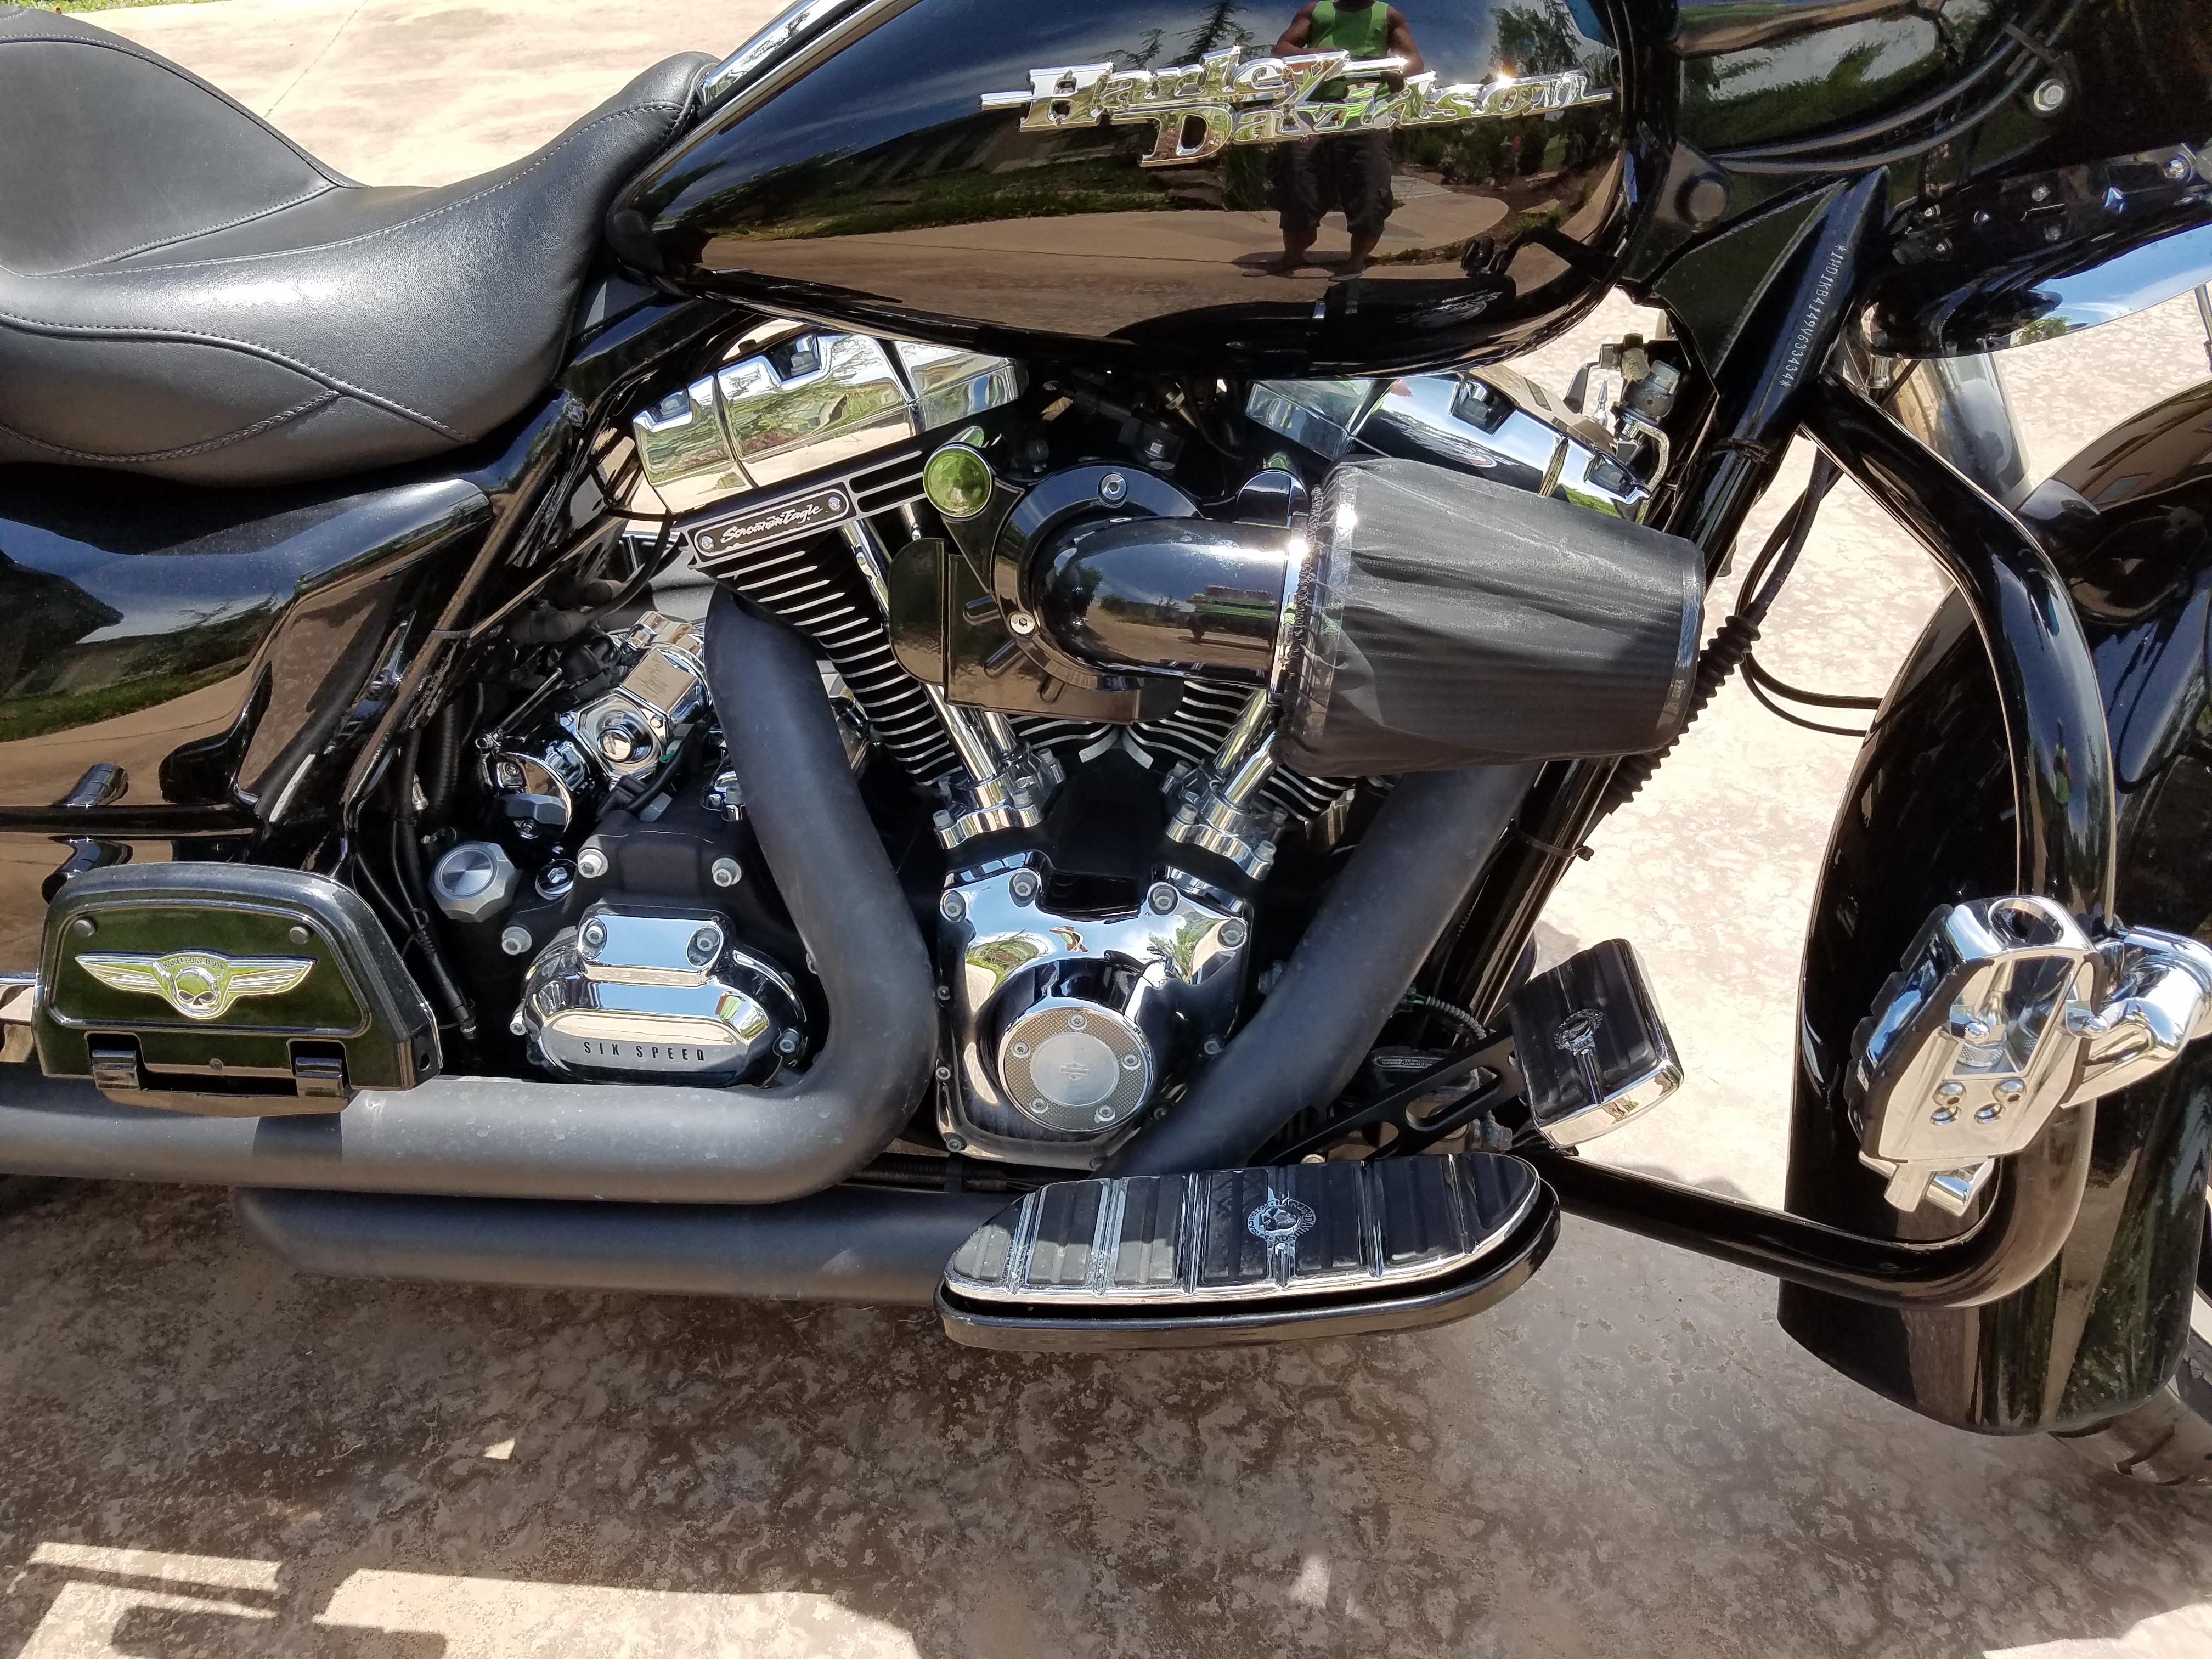 Whats my bike worth?? - Harley Davidson Forums